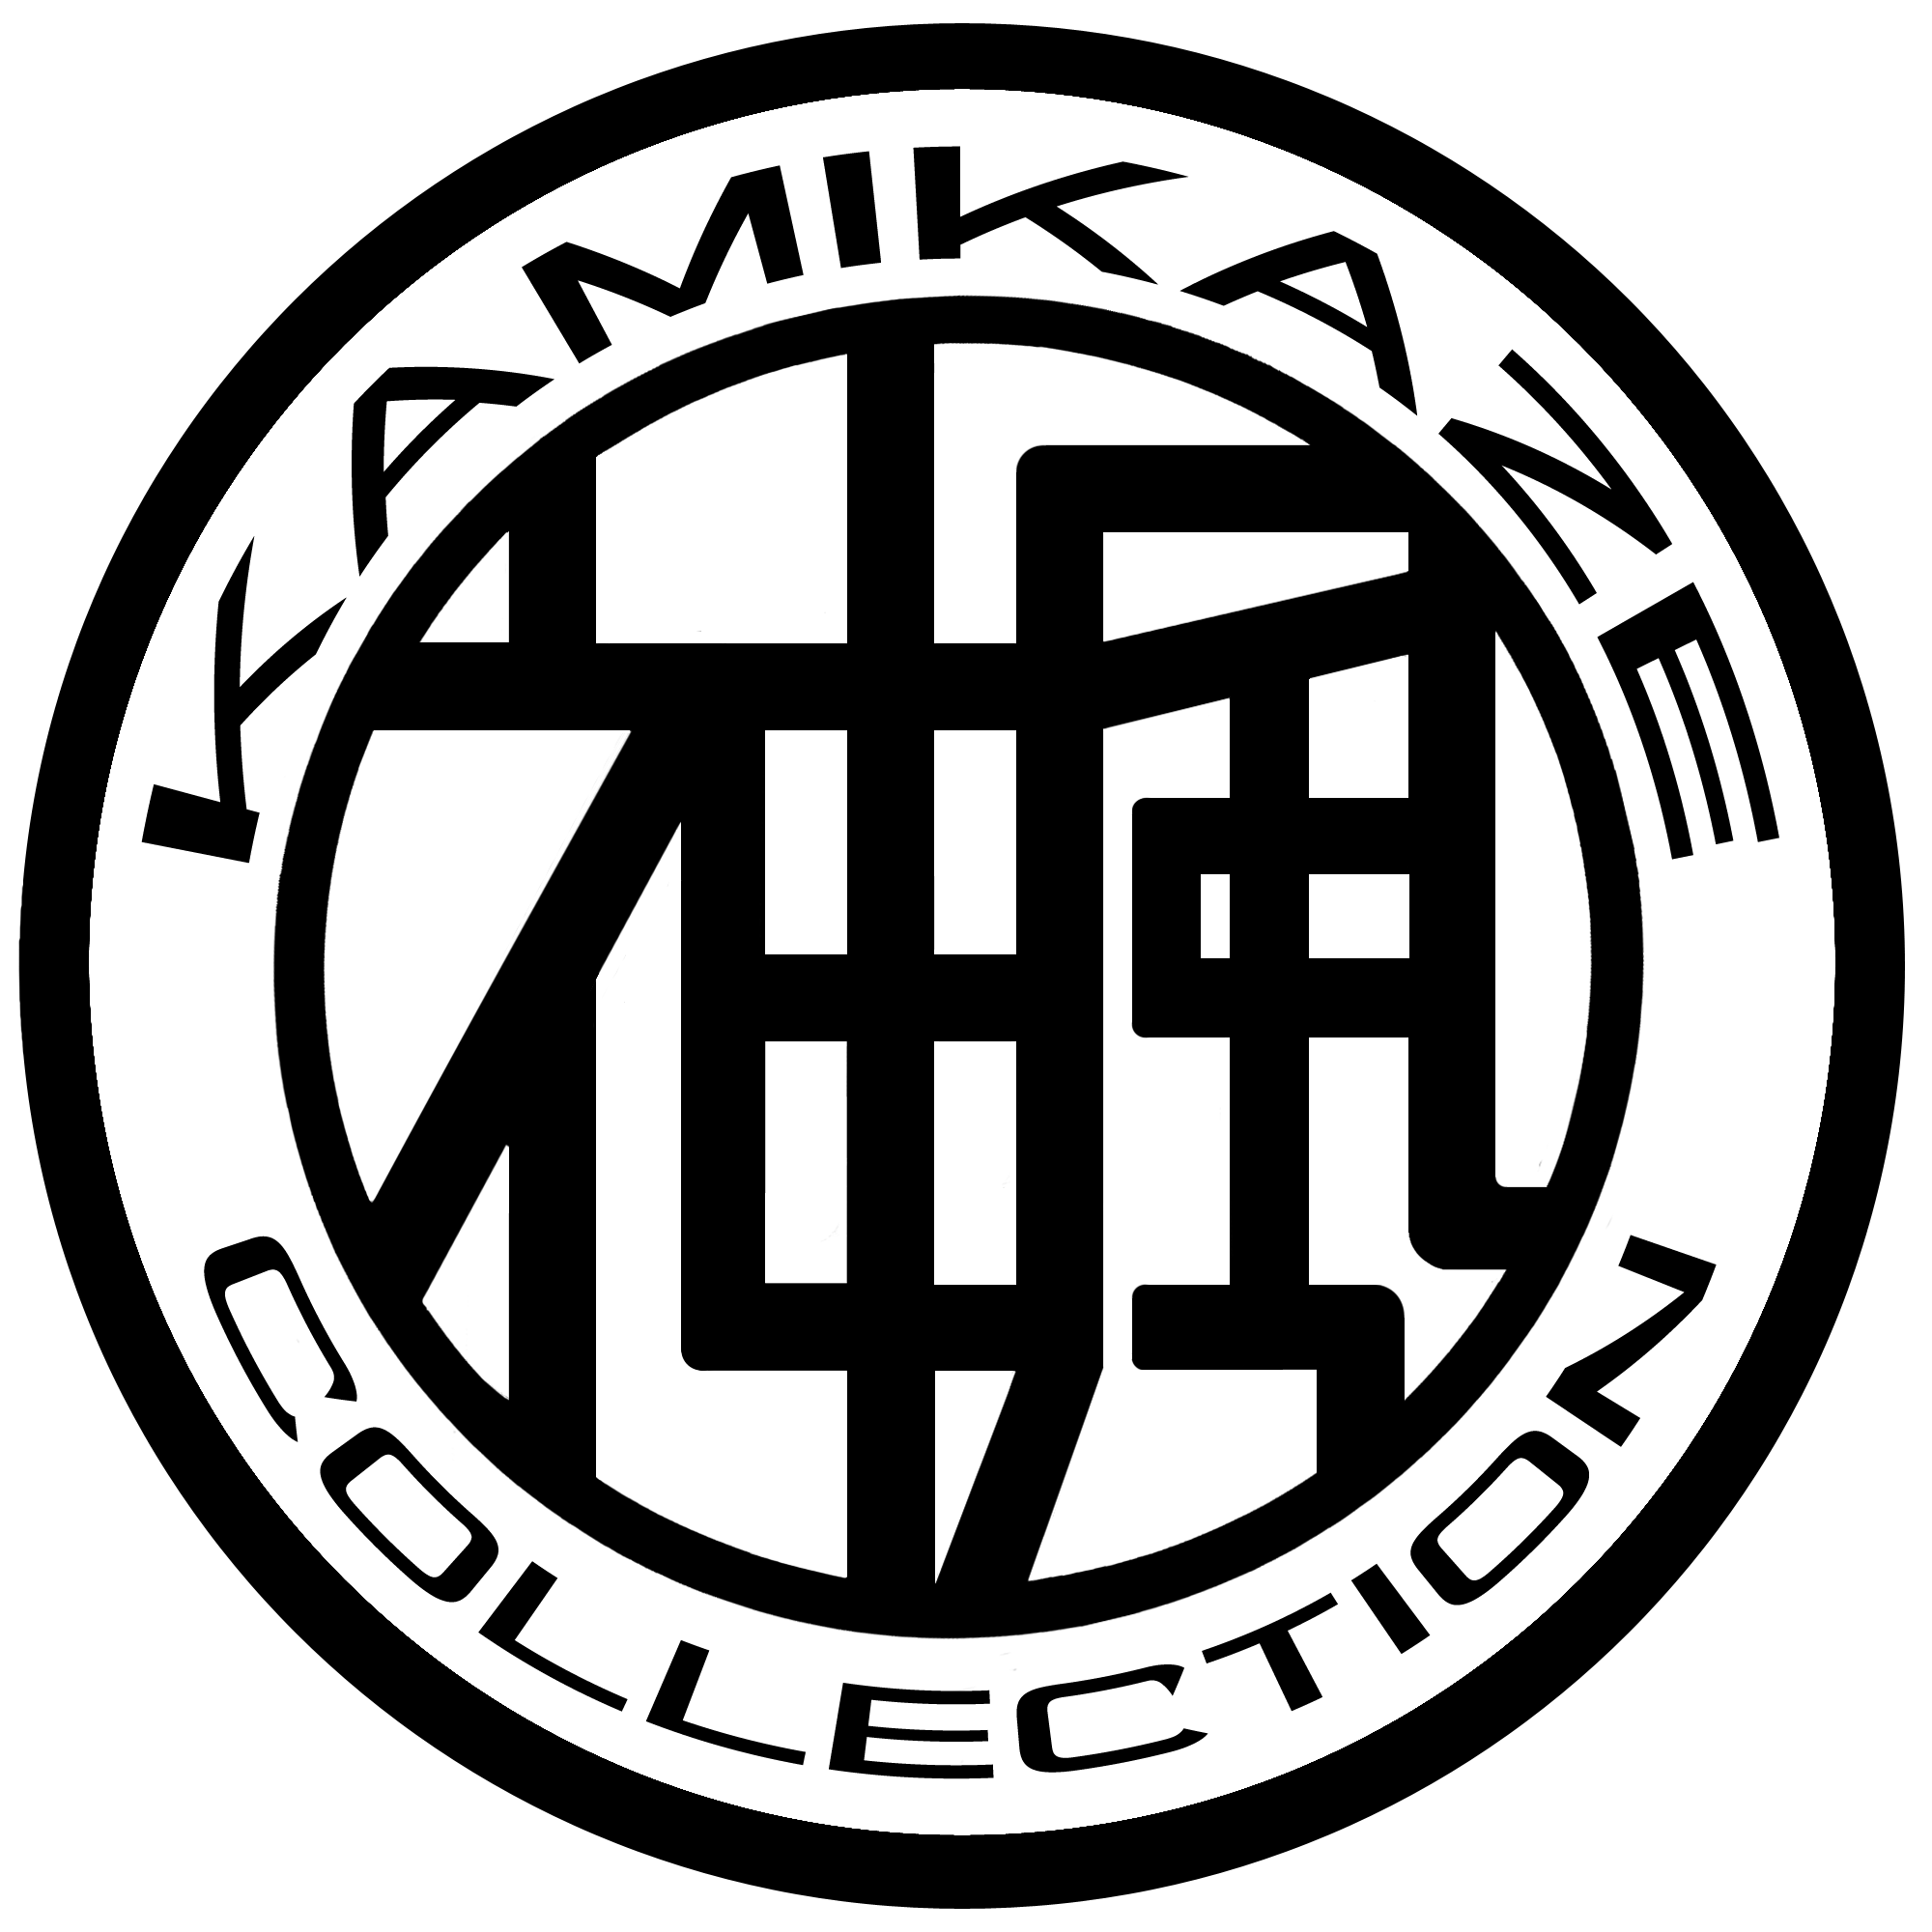 Kamikaze collection